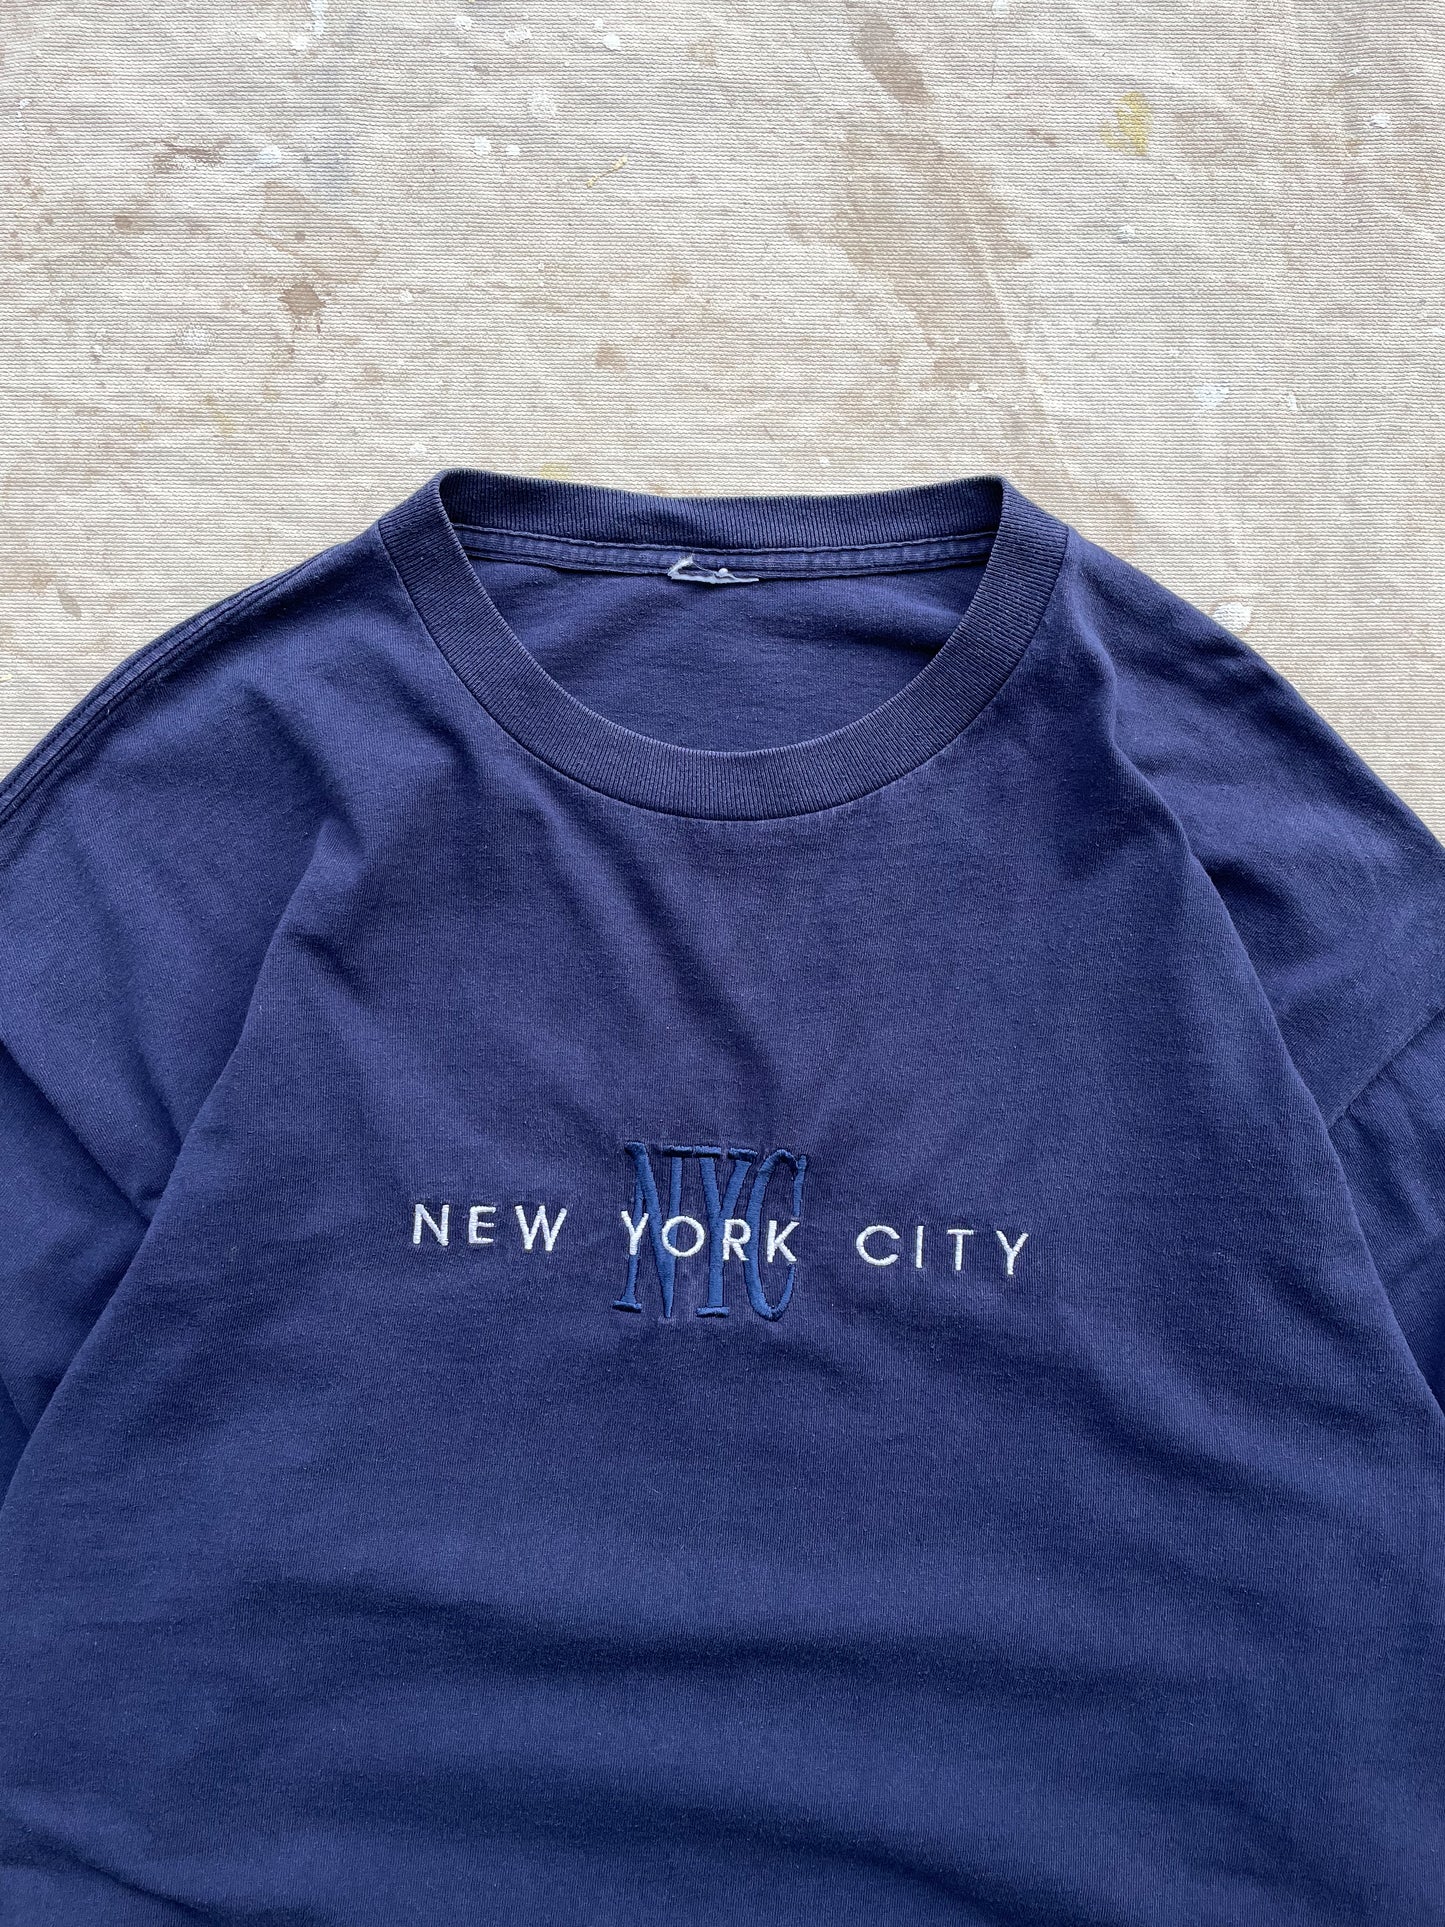 NYC LONG SLEEVE—NAVY [XL]